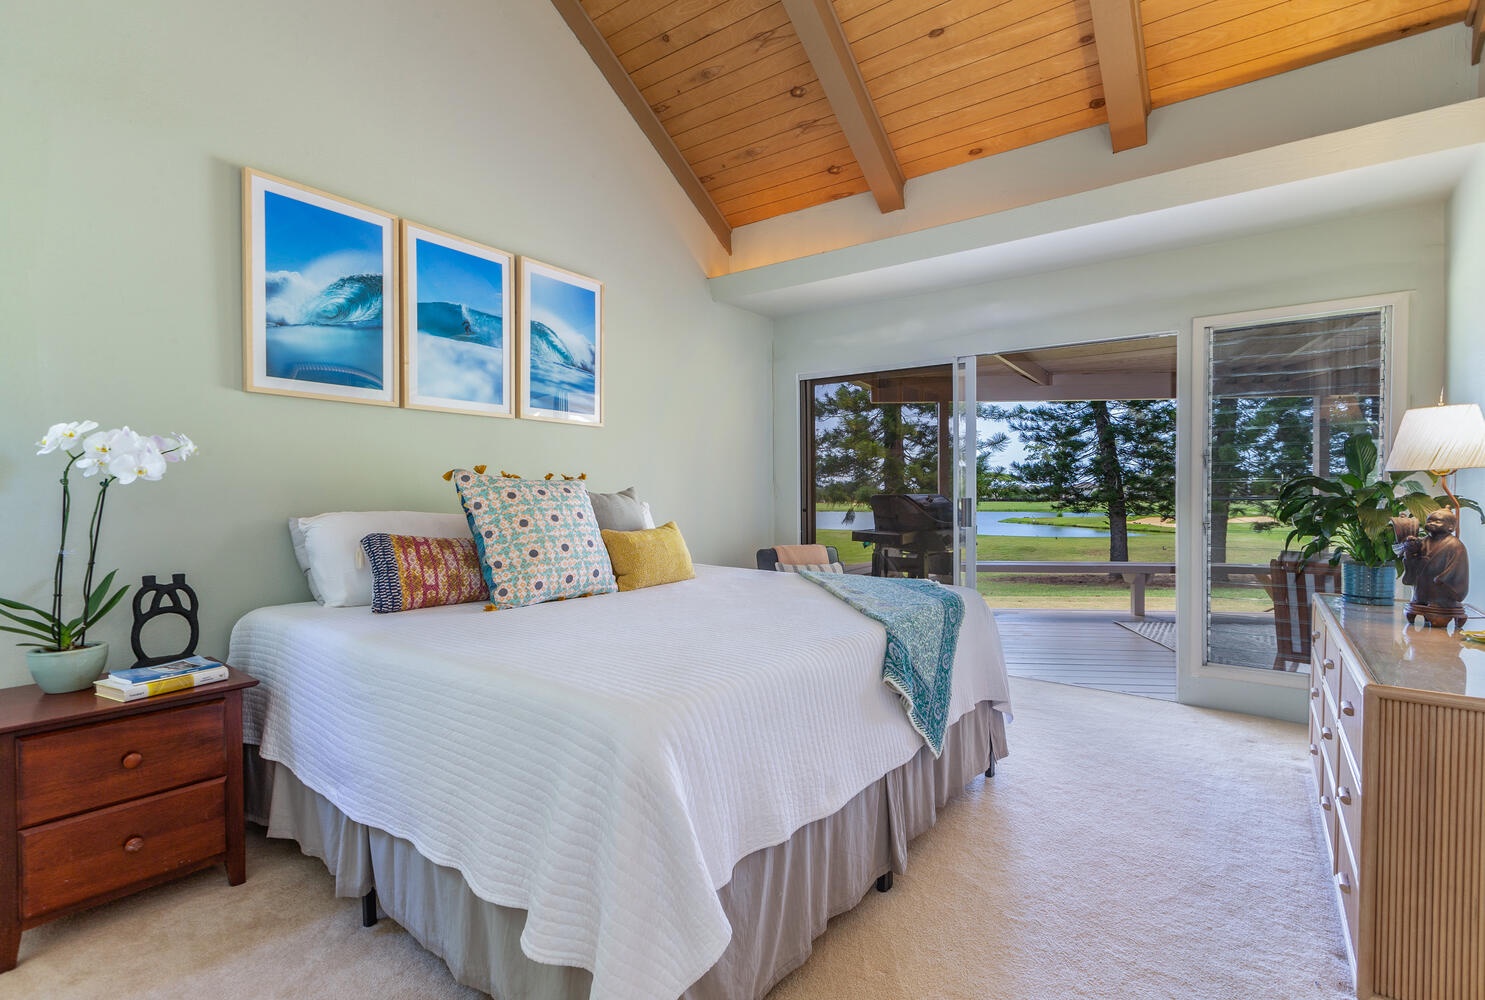 Princeville Vacation Rentals, Wai Puna - Guest bedroom 2 with king, golf views, lanai access, ensuite bathroom